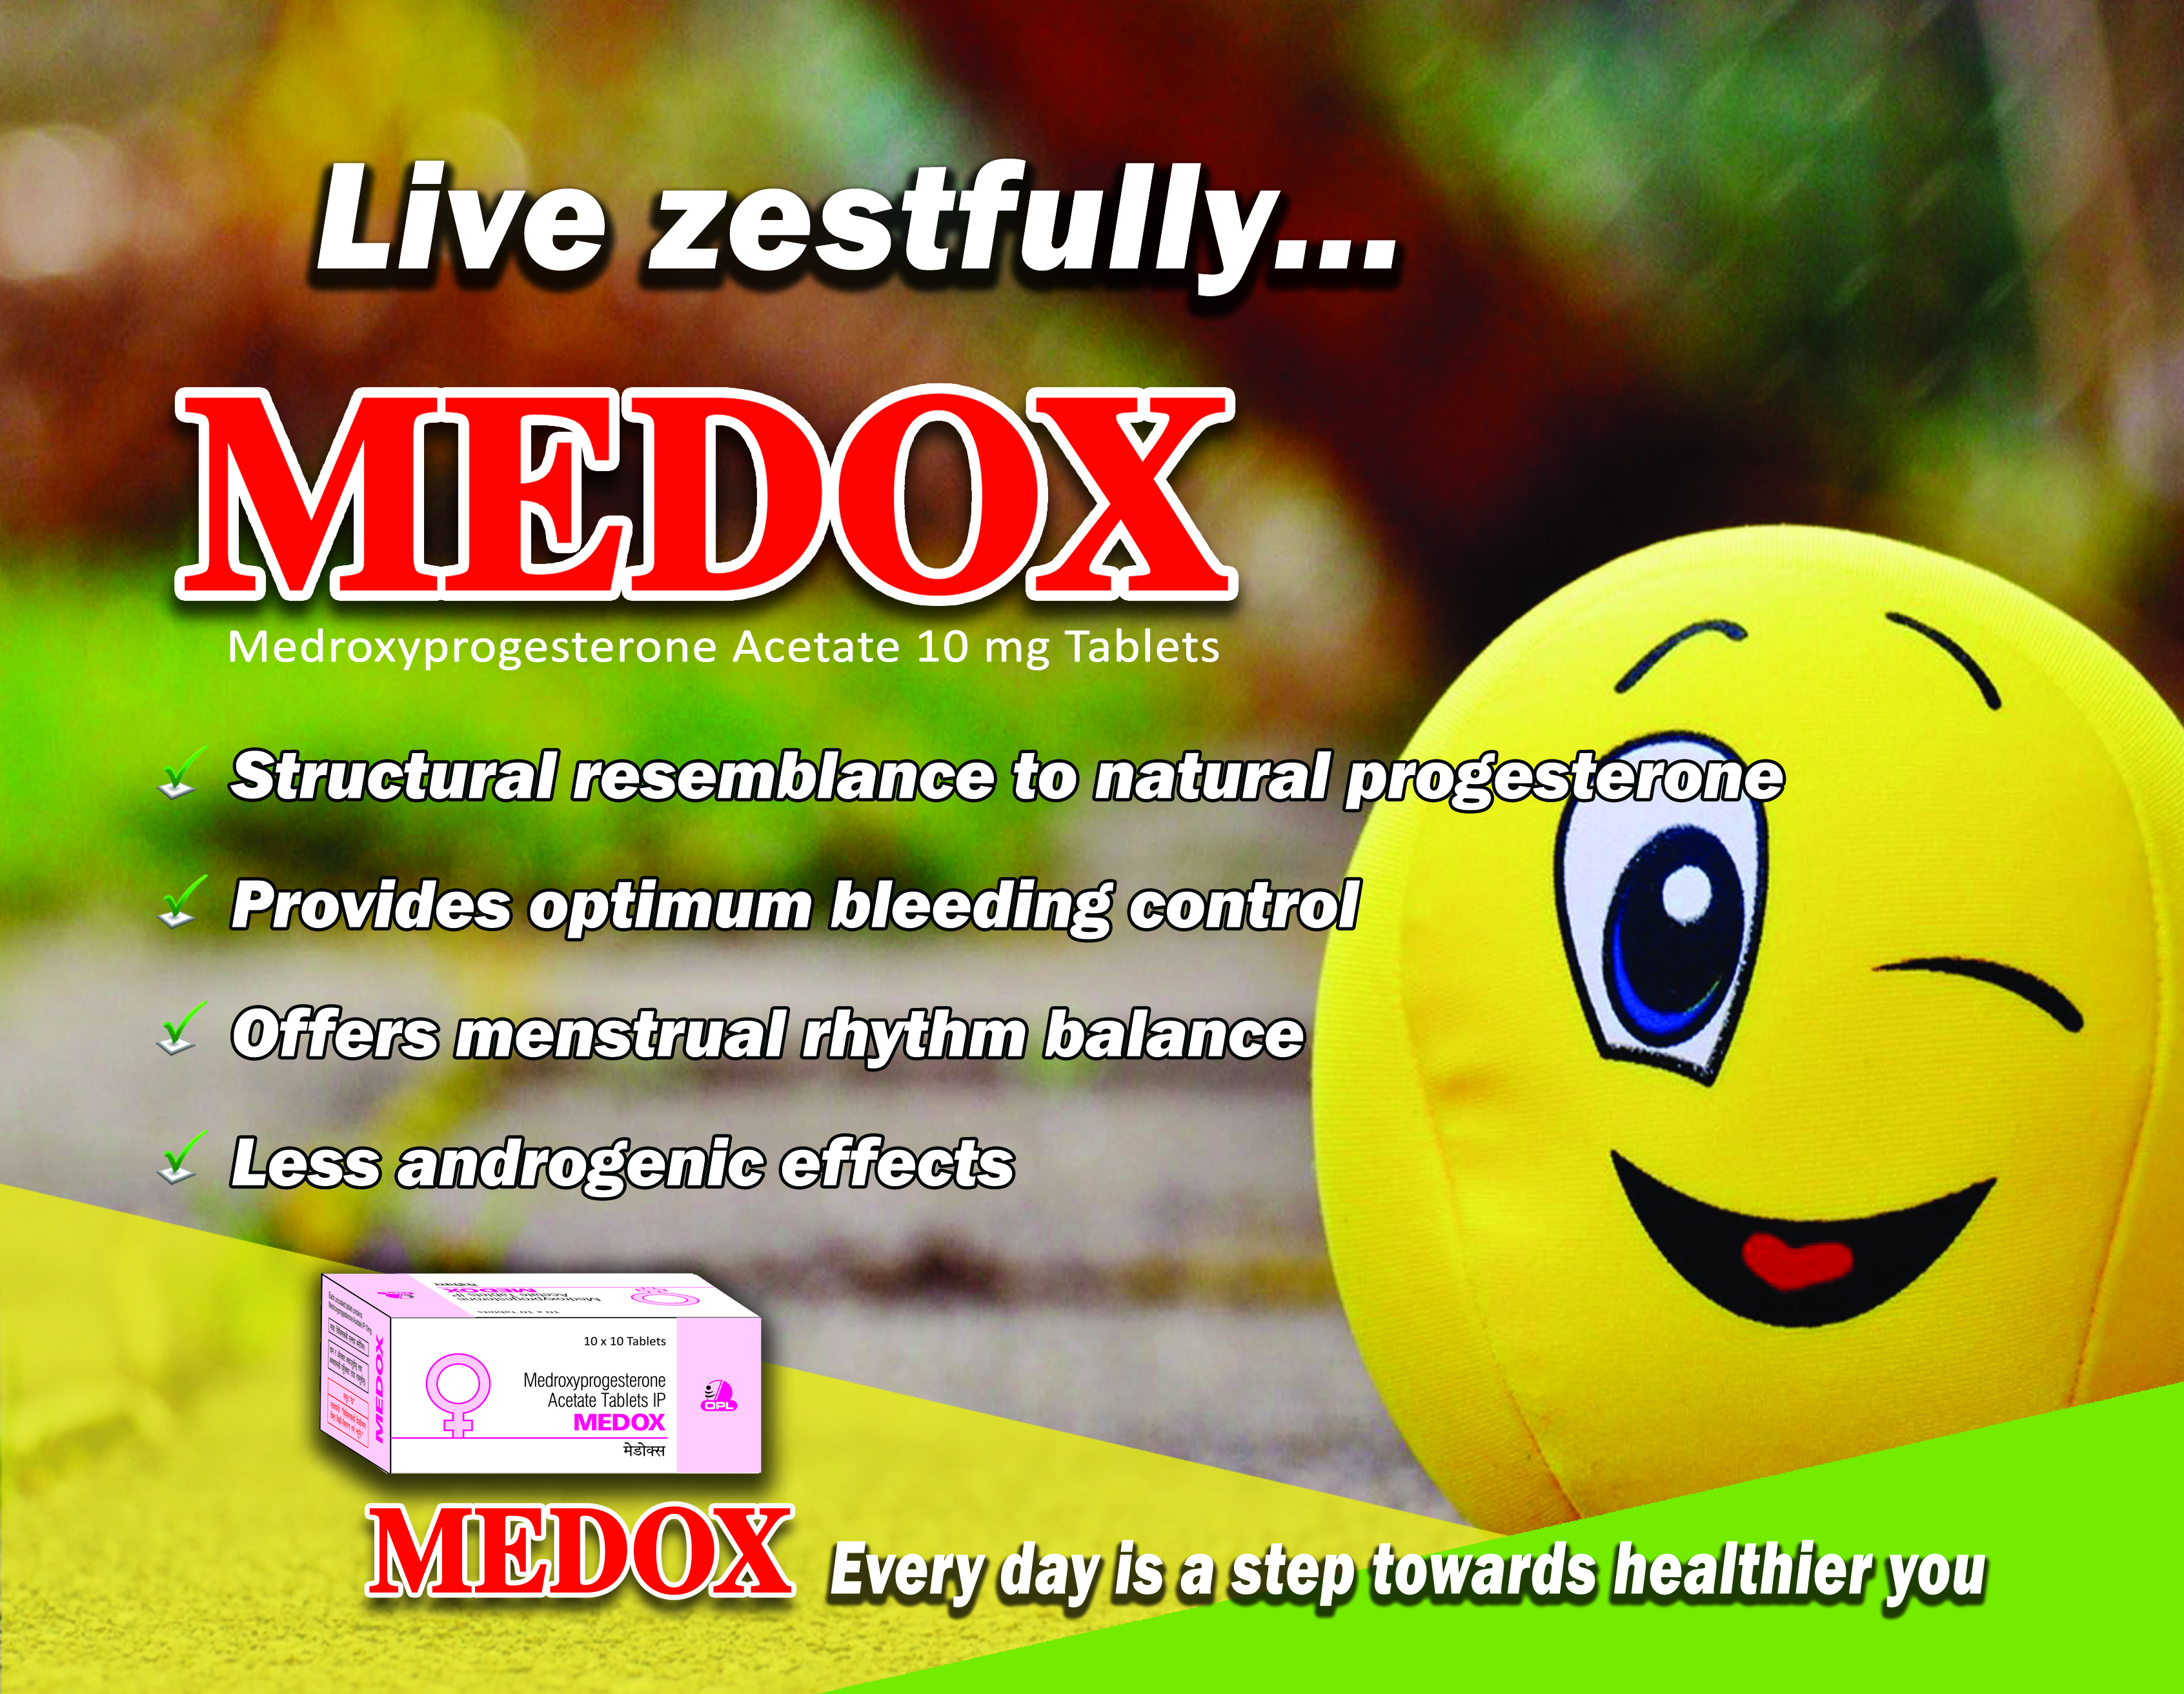 MEDOX NEW Folder 1 st Page